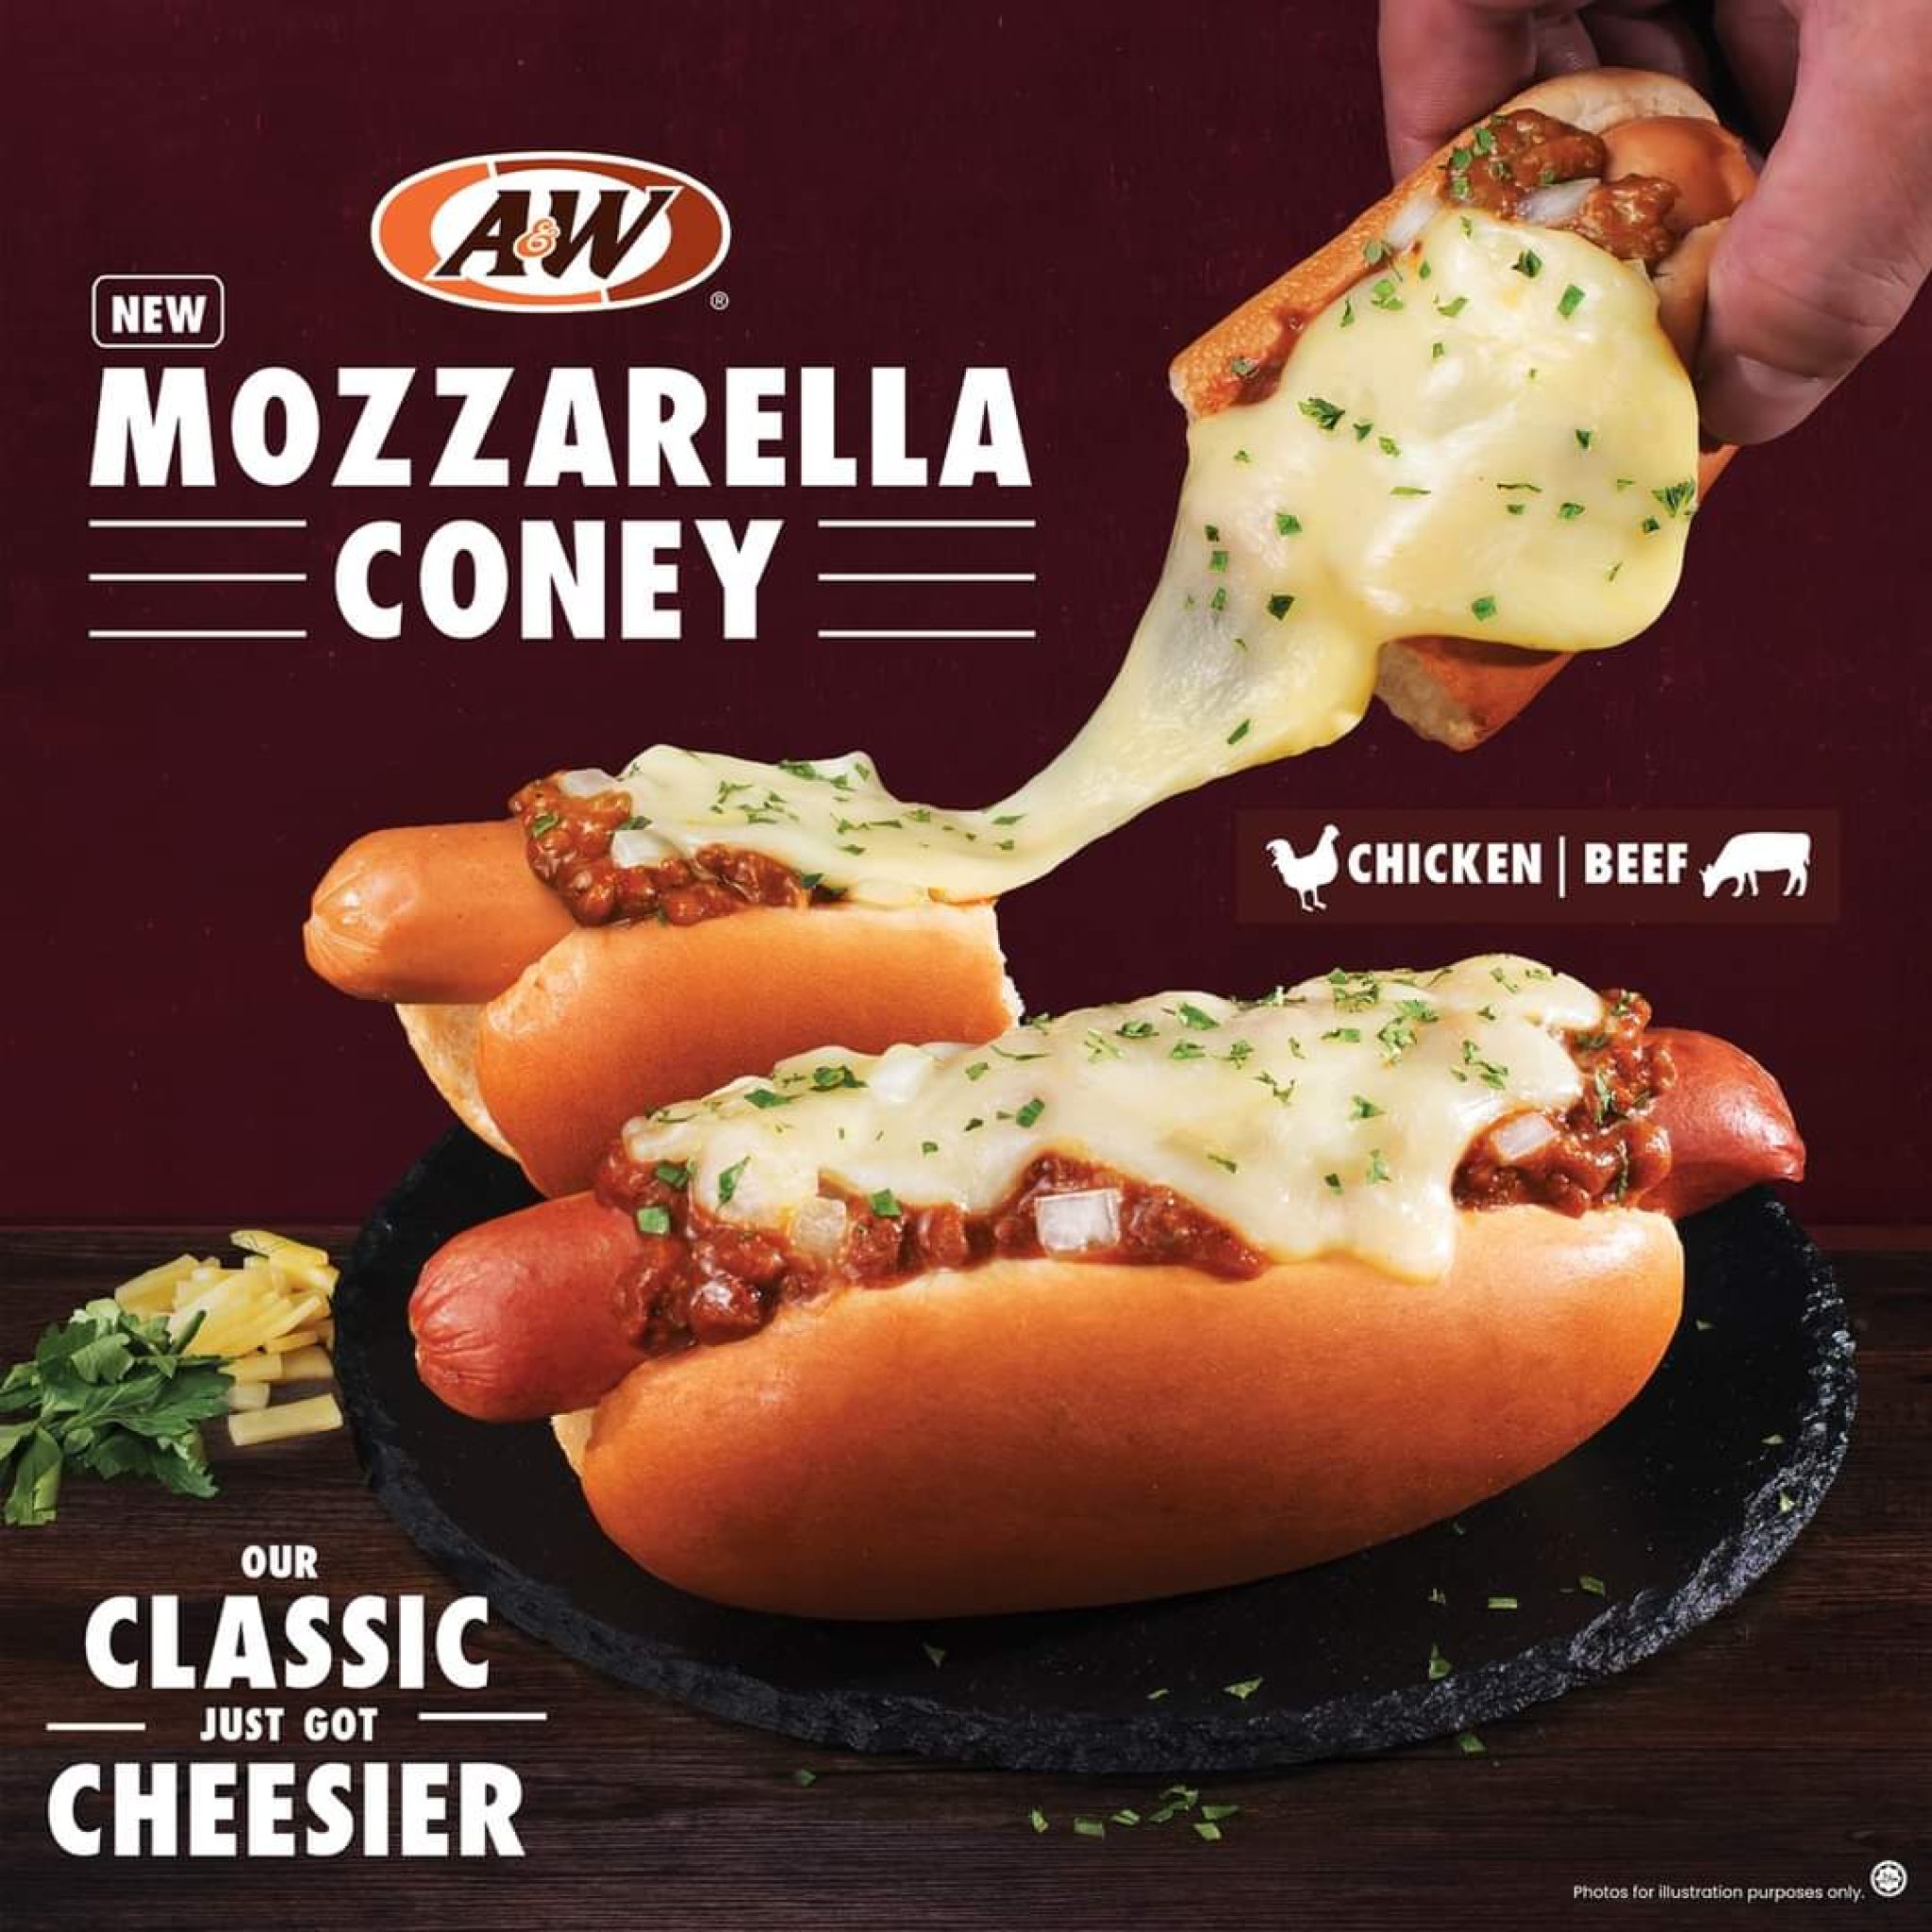 A&W Mozzarella Coney New Menu Promotion